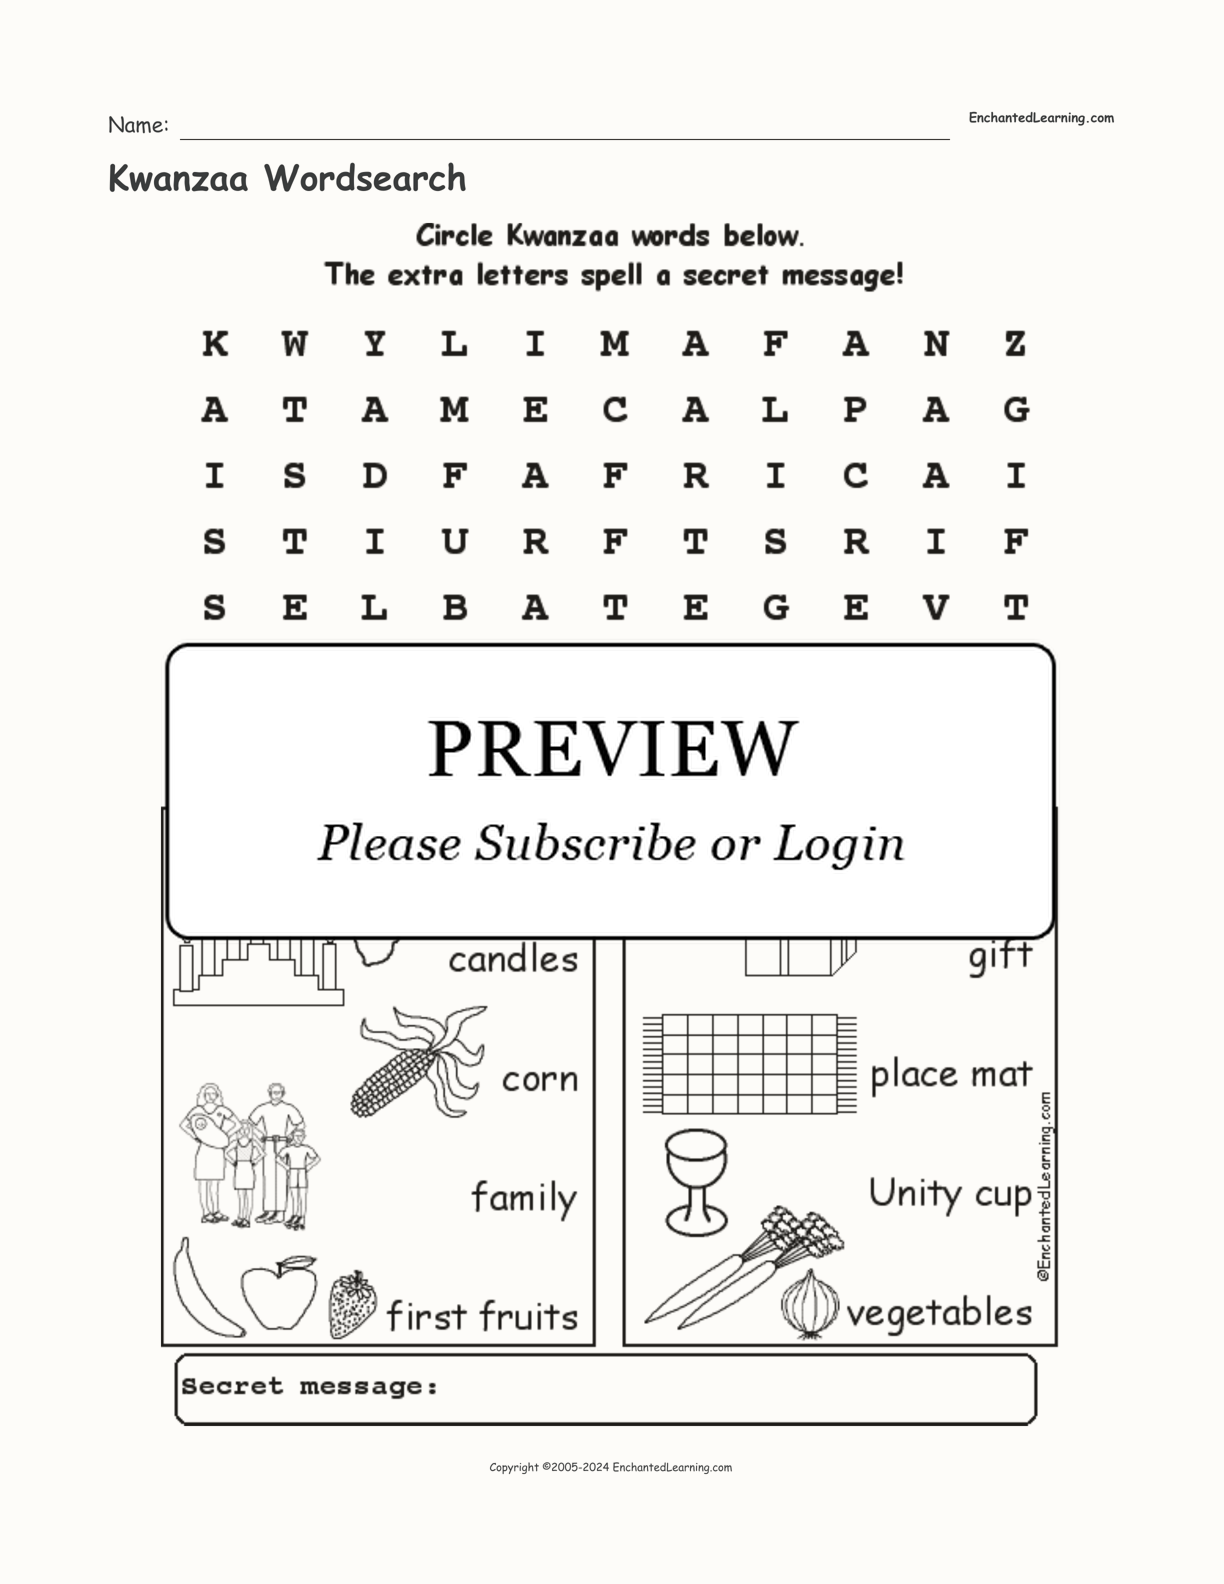 Kwanzaa Wordsearch interactive worksheet page 1